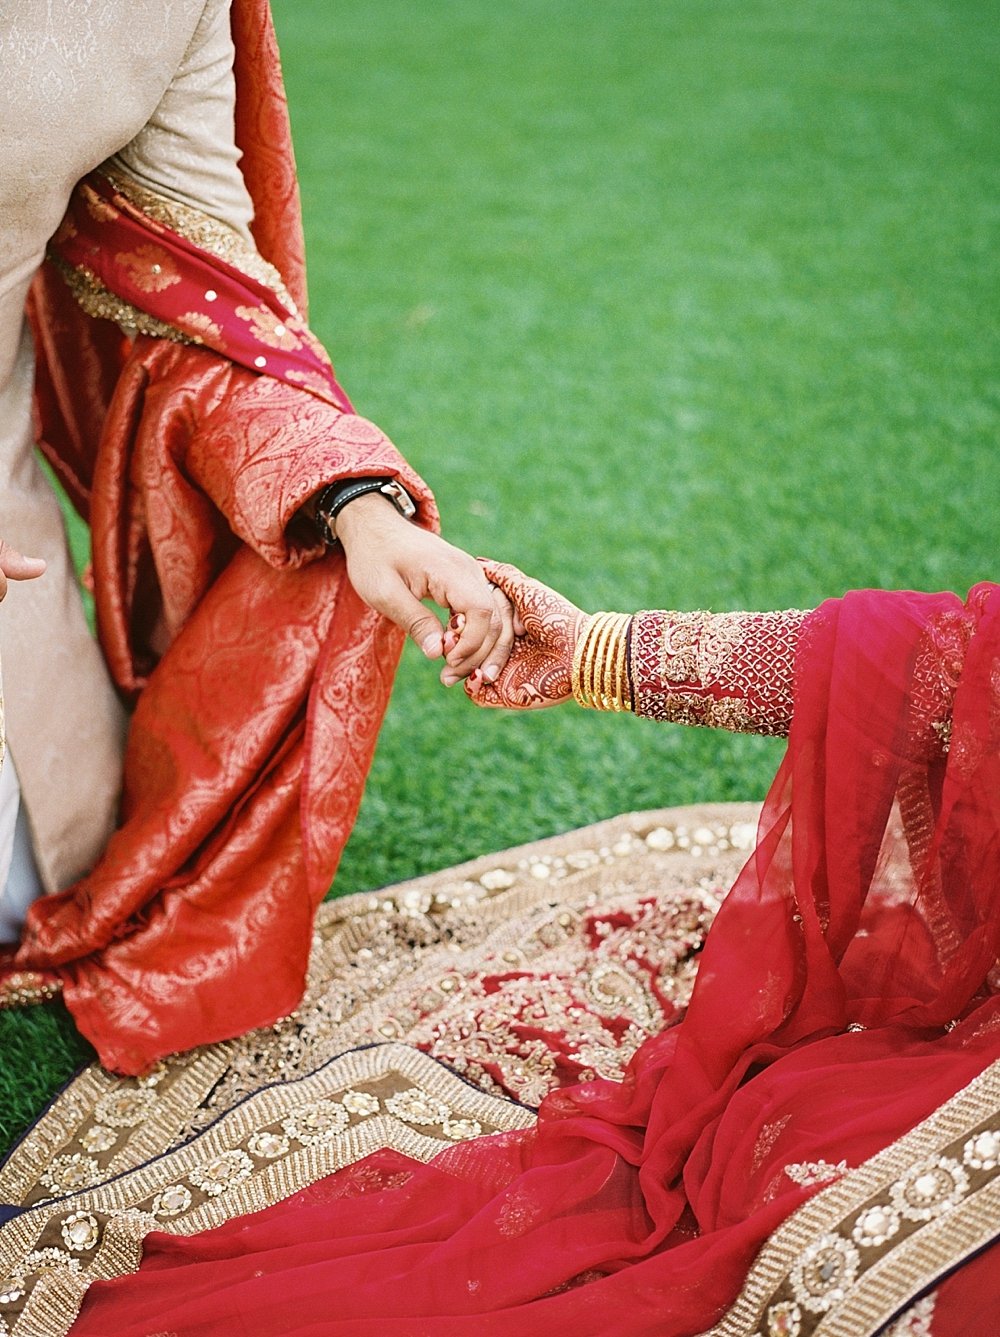  Indian Wedding Hilton Bonnet Creek Waldorf Astoria Orlando FL Wedding Photos Timeless Photography | Ashley Holstein  #portra400 #indianwedding #henna #hands